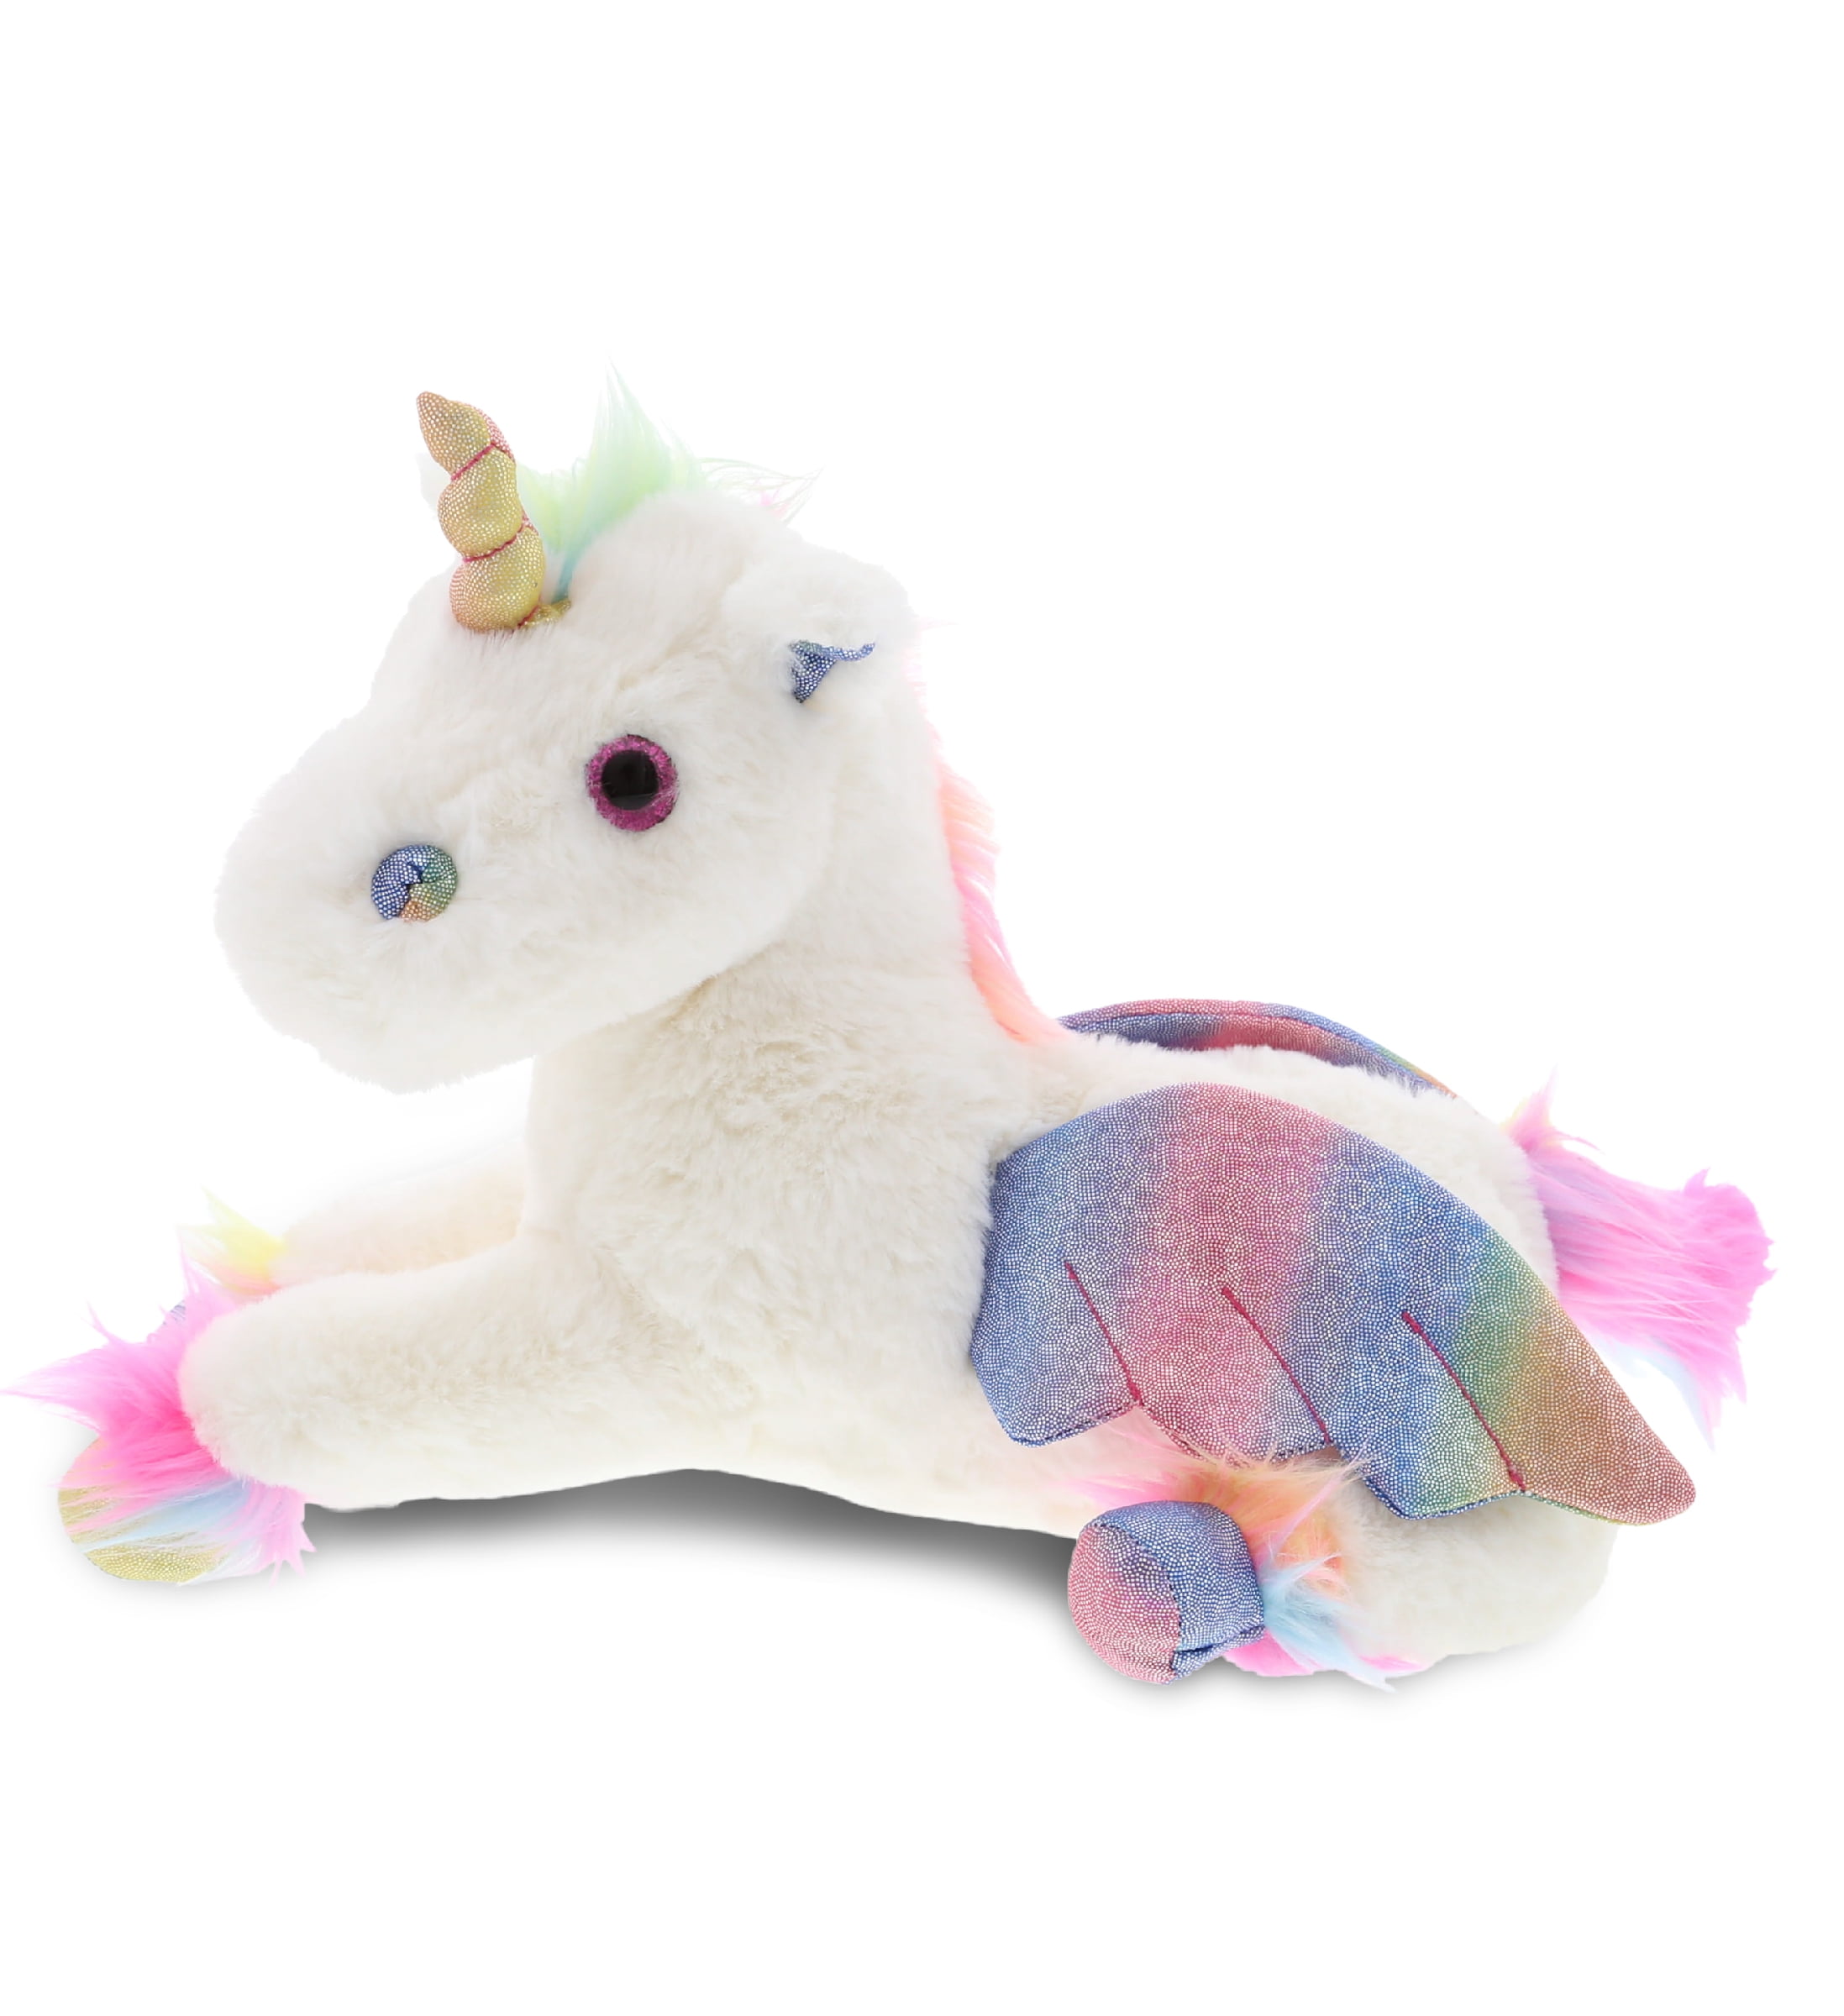 Cute stuffed unicorn rainbow plush toy 10" super soft and cuddly pony gift set 